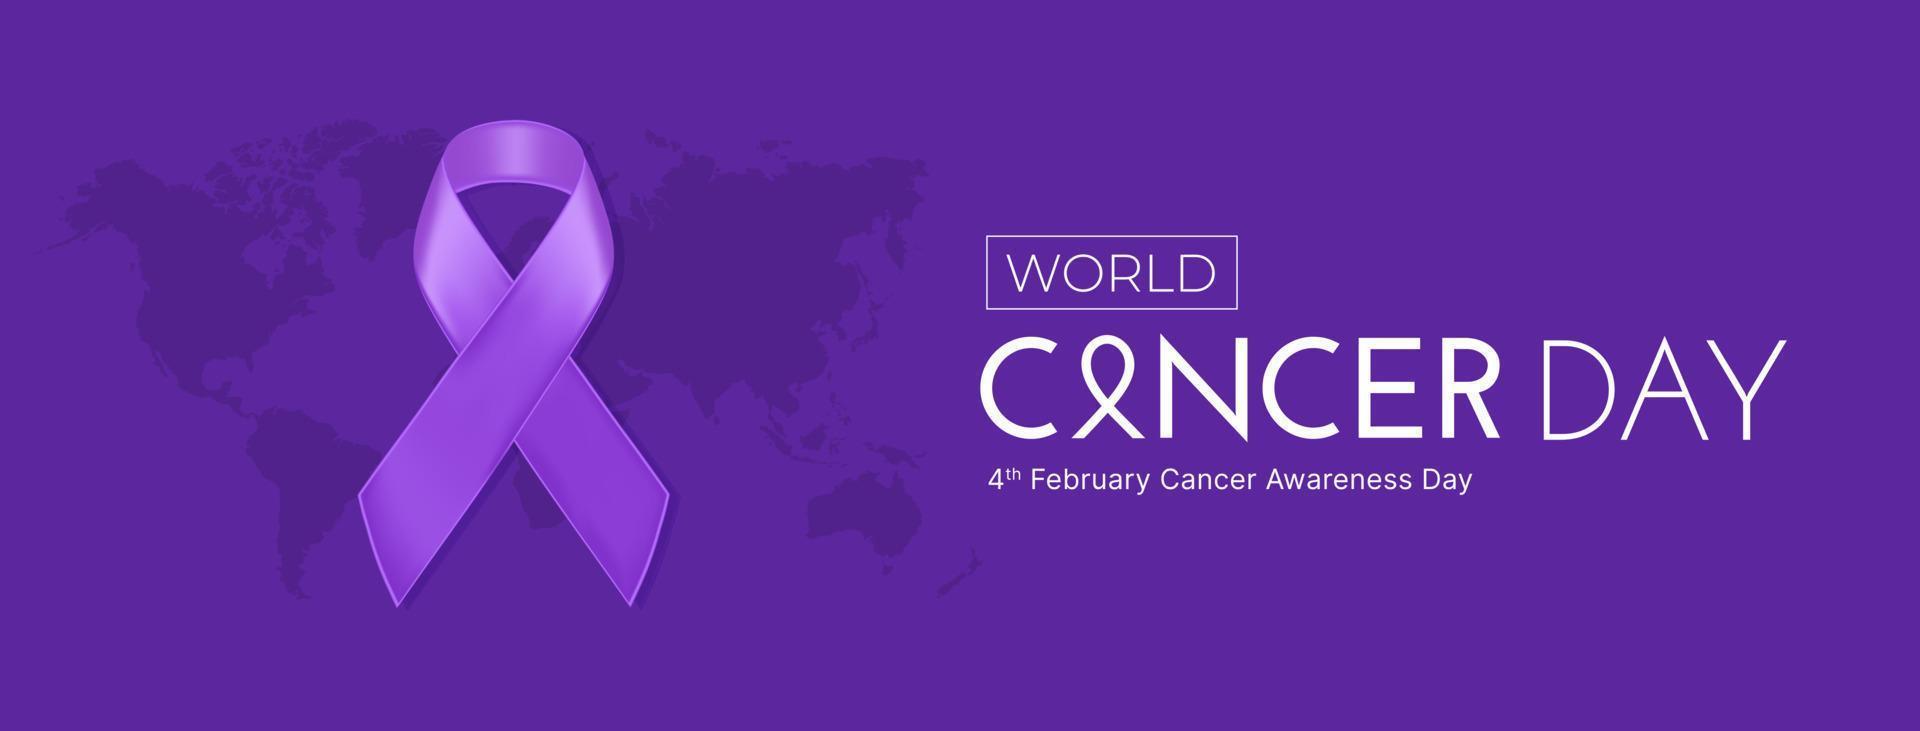 World Cancer Day 4th February Social Media Post vector